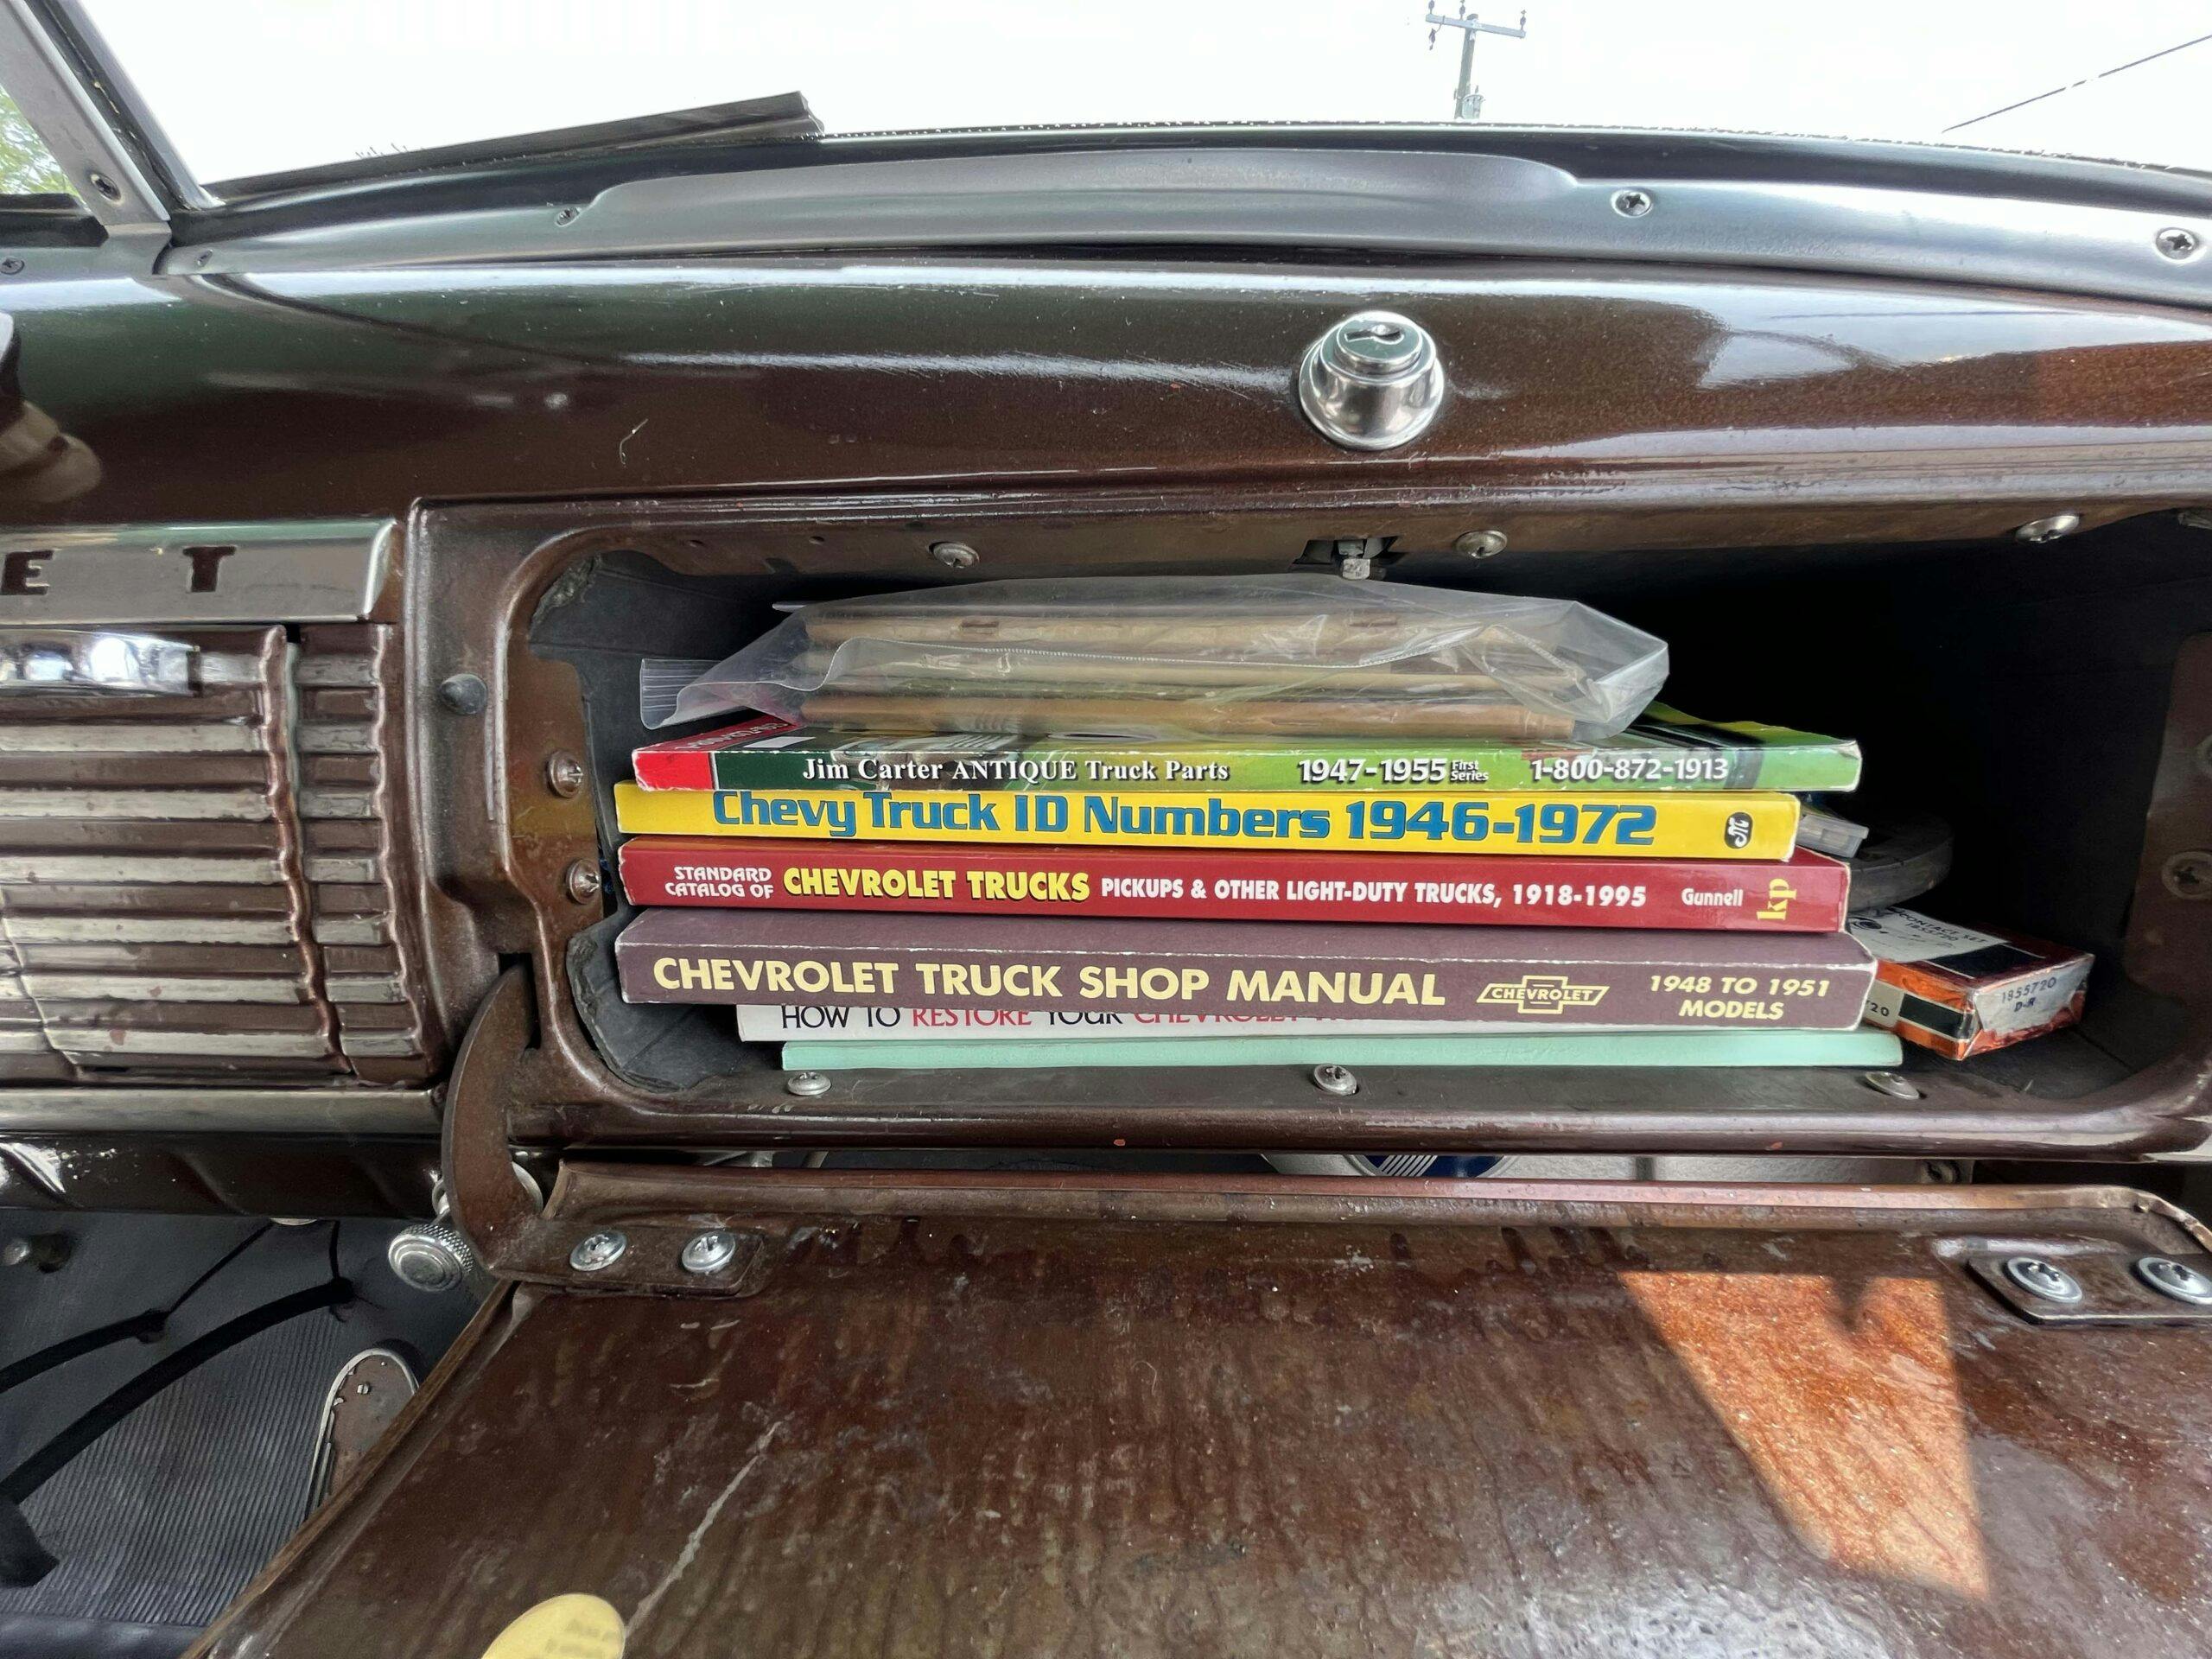 1952 Chevrolet Pickup manuals glove box